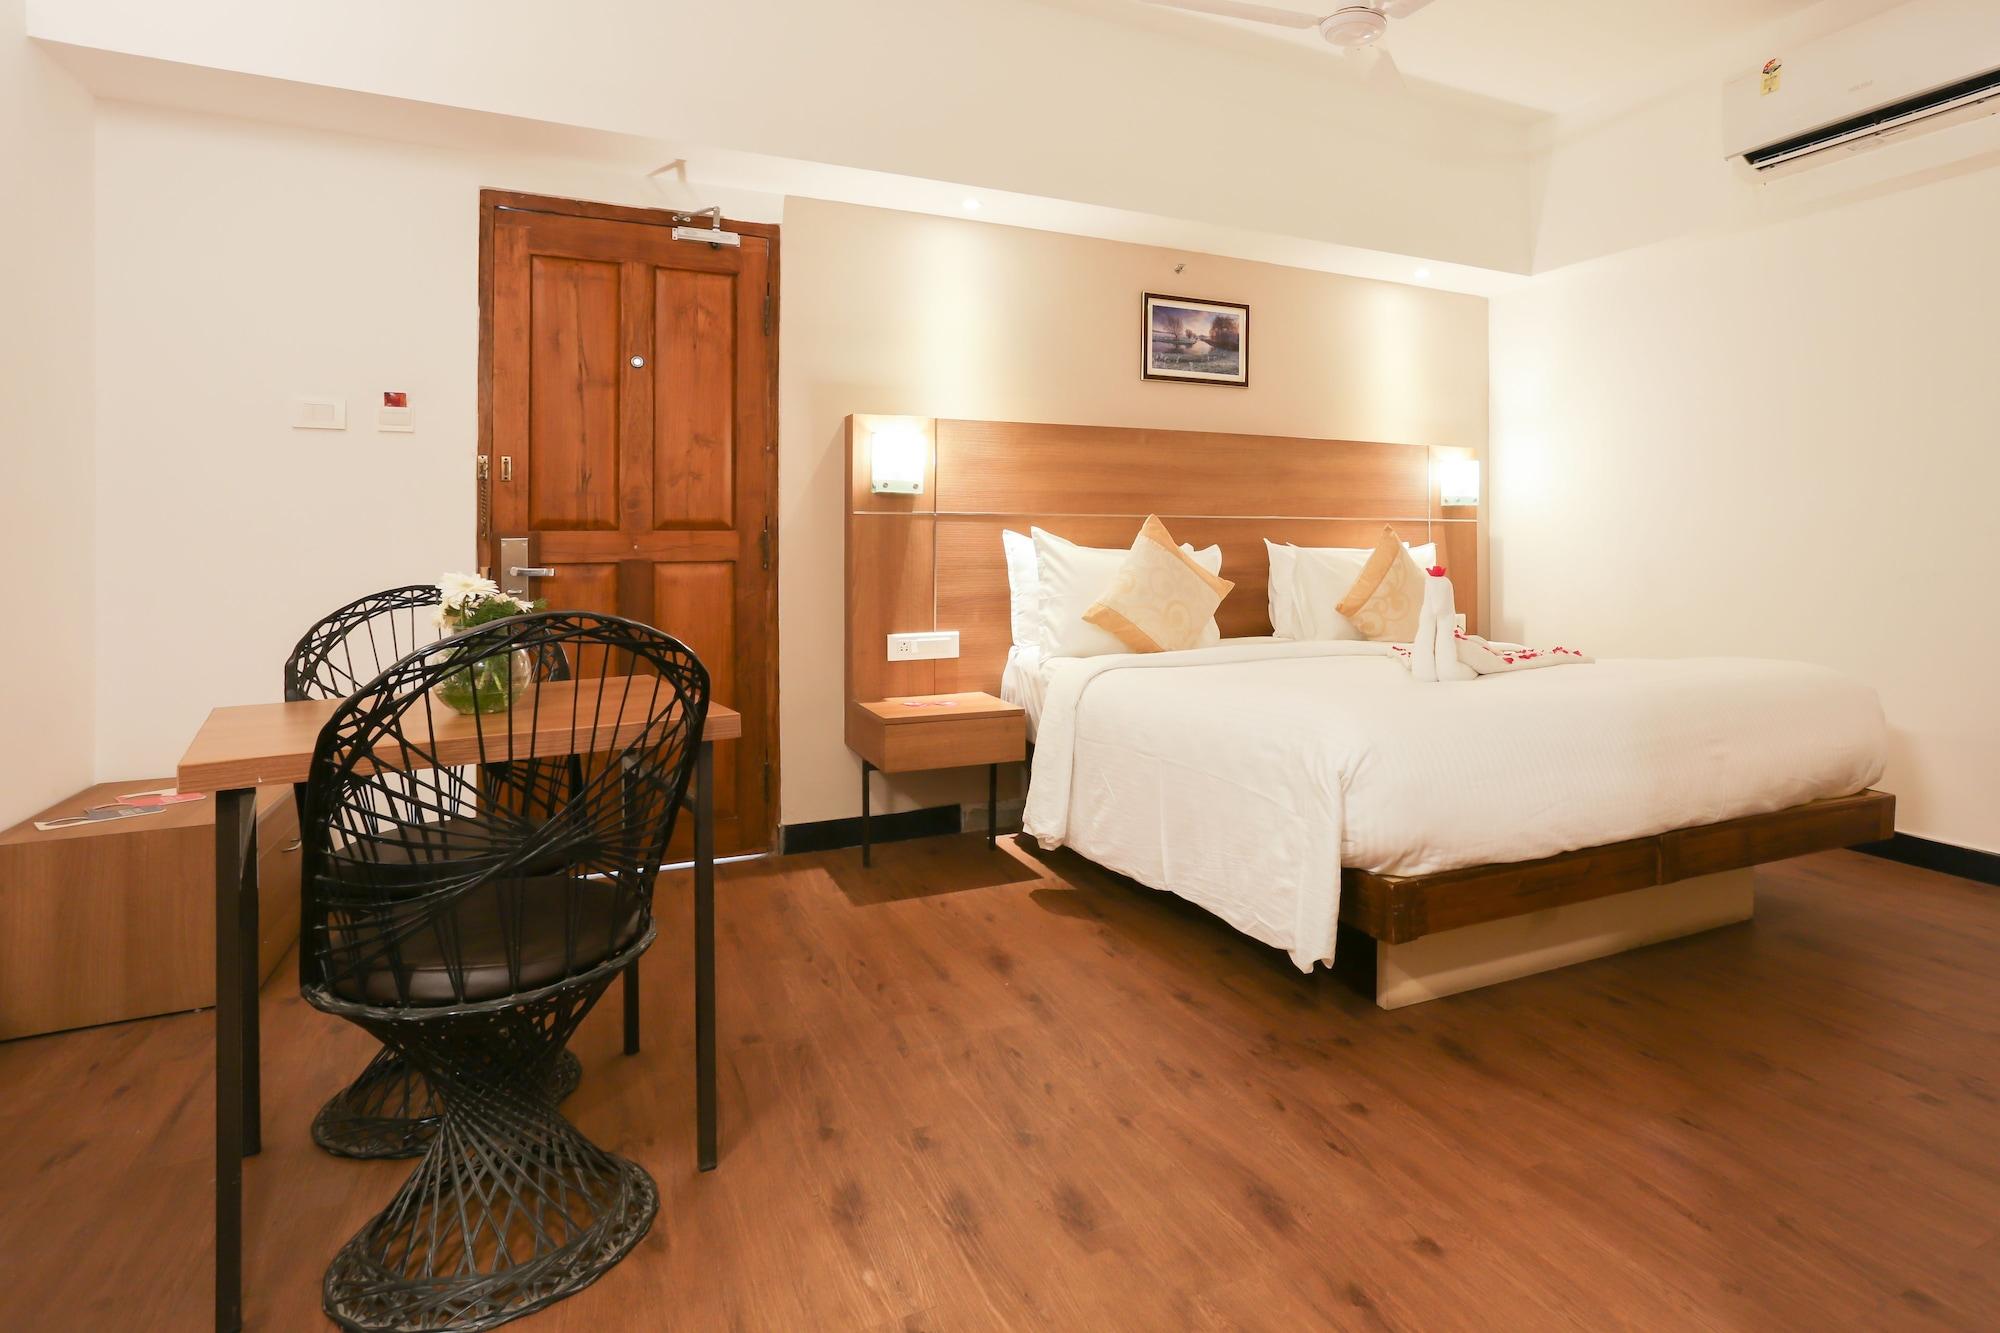 Zip By Spree Hotels Mangala International Coimbatore Exterior photo